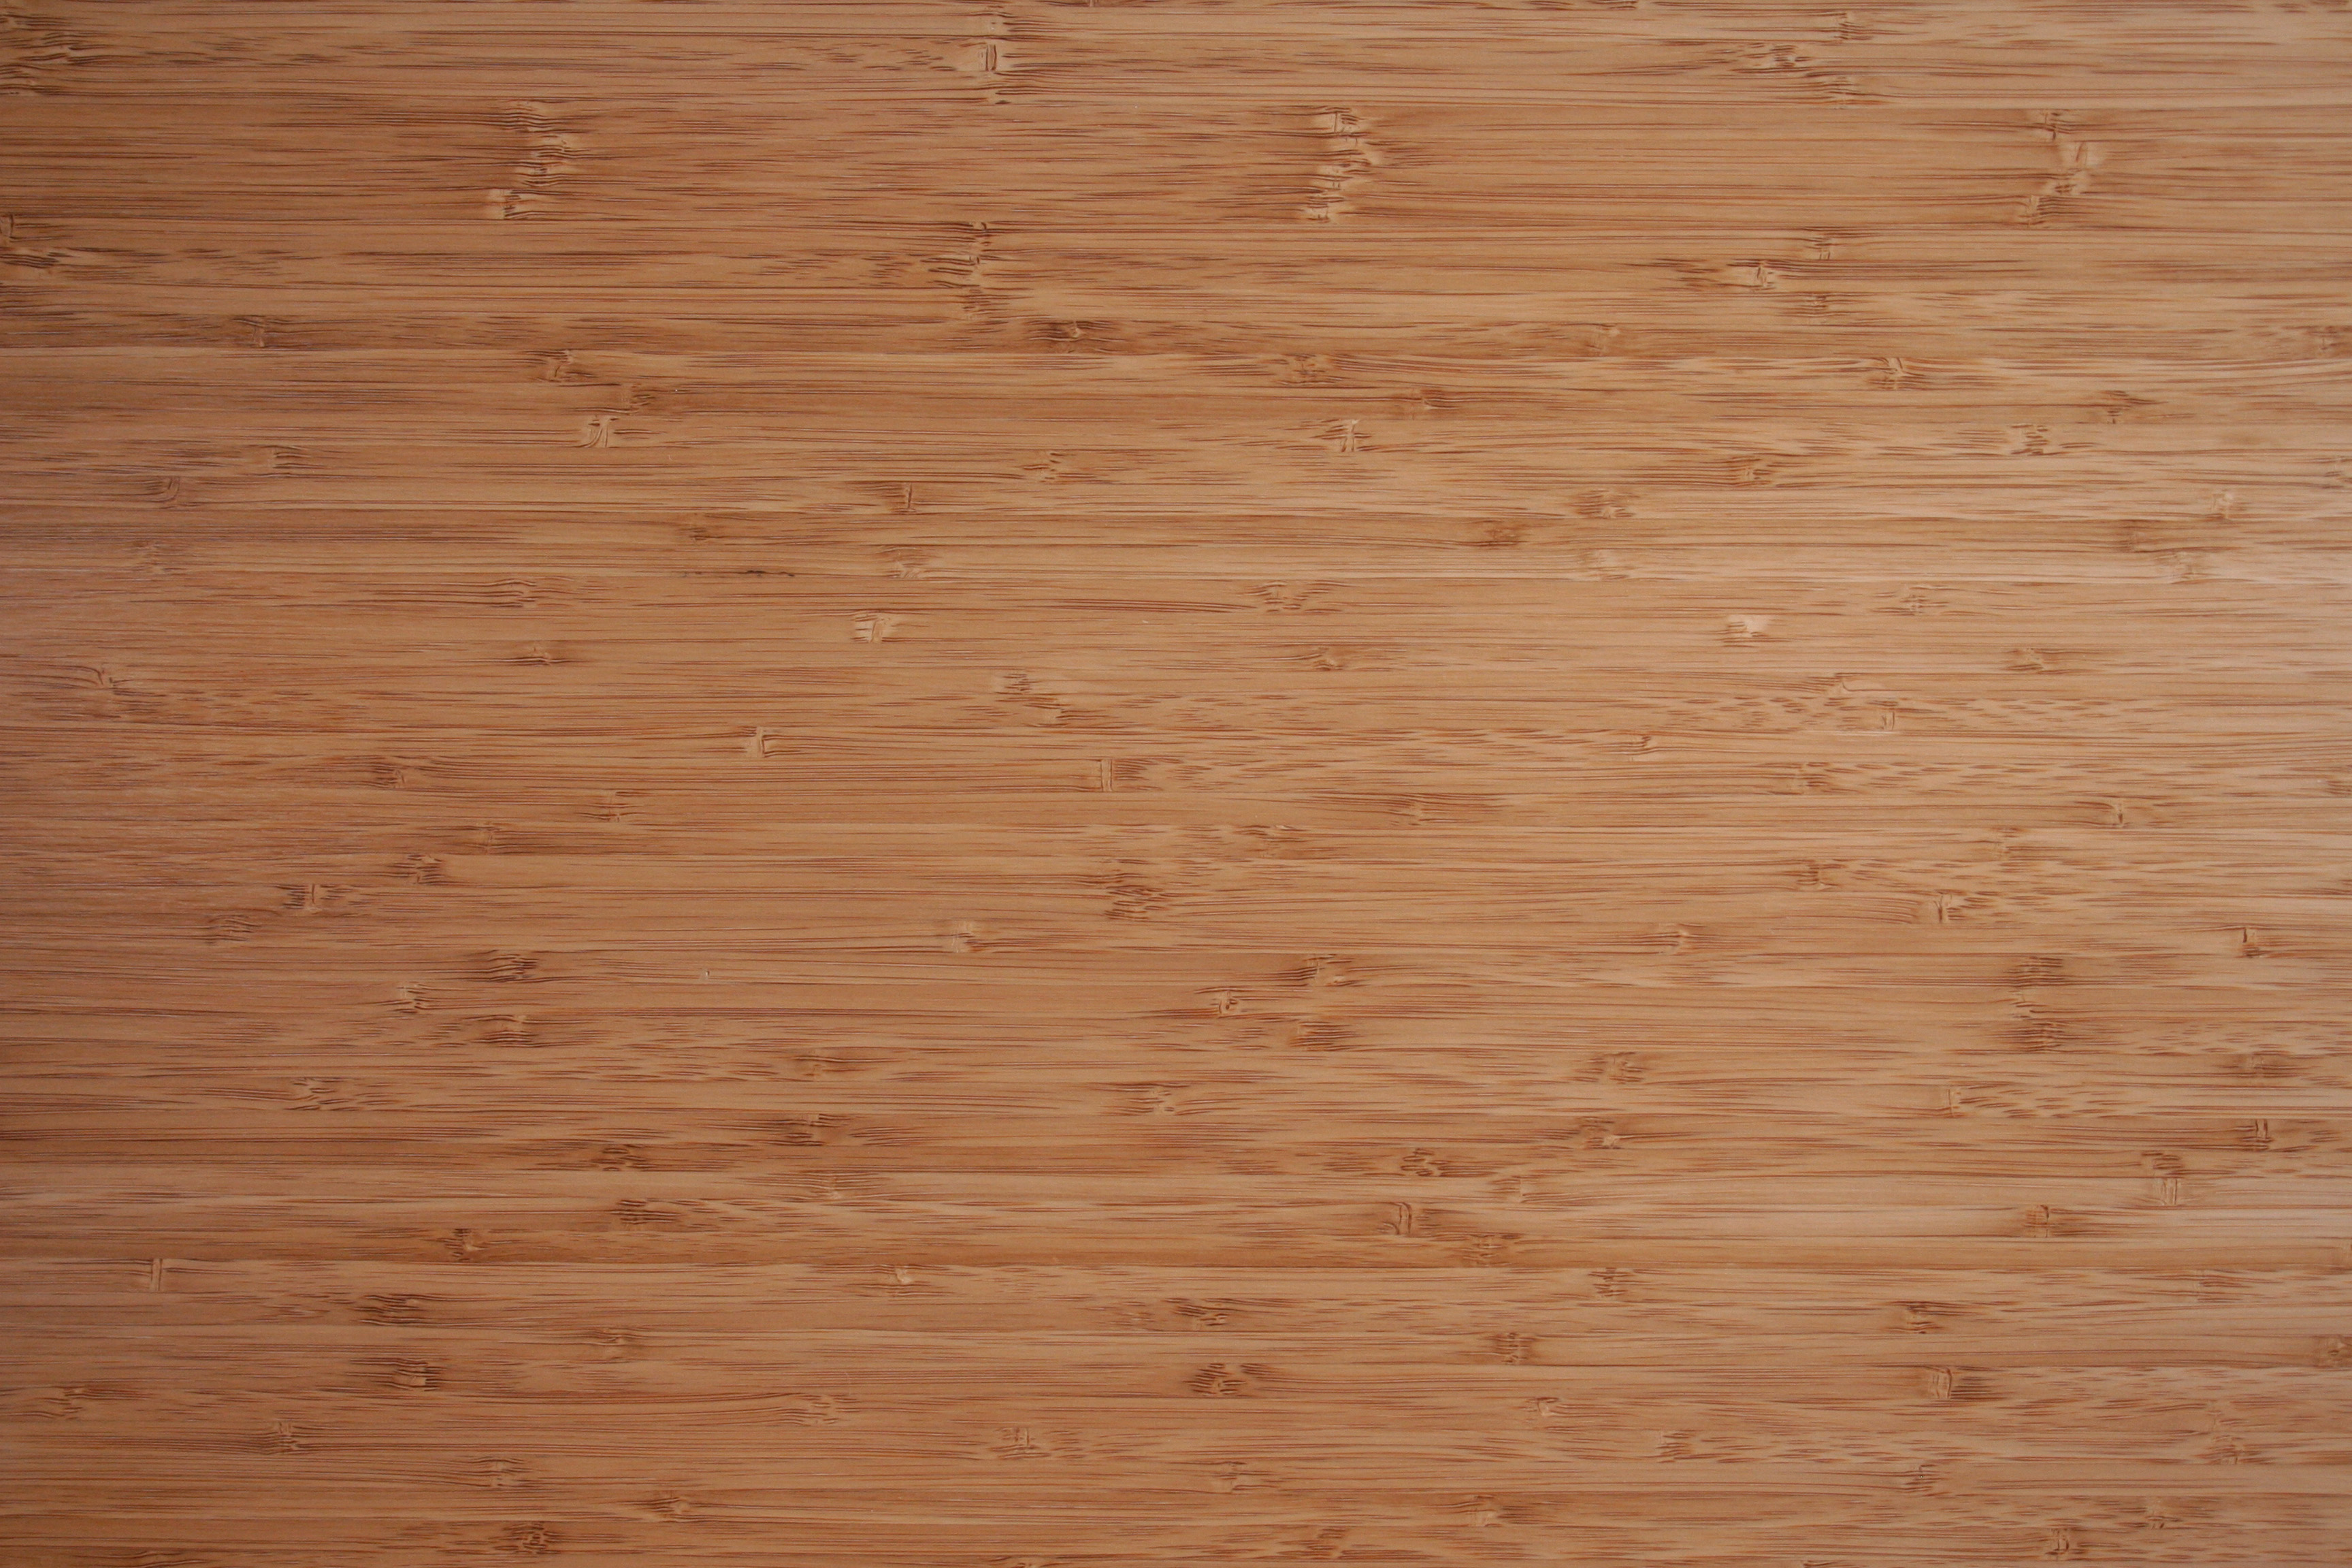 Bamboo Texture Wood Floor Natural Wood Pattern Texture Alex 